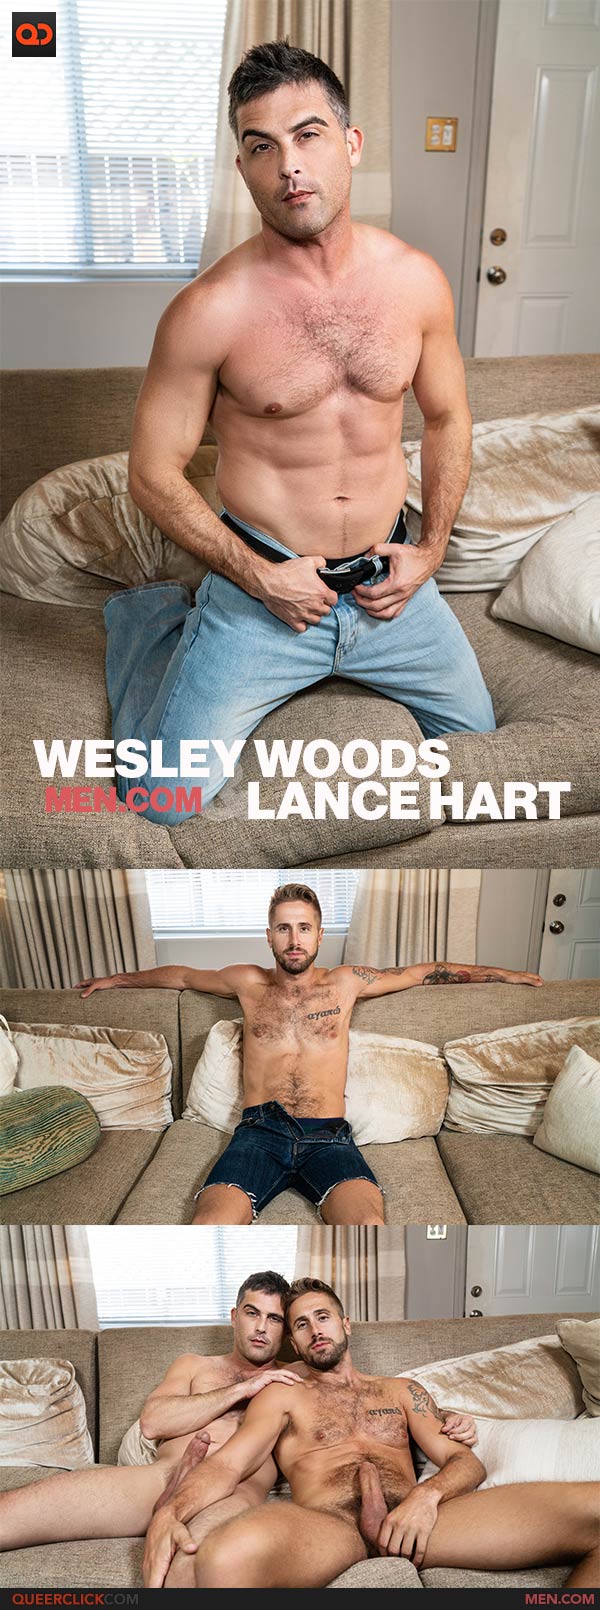 Men.com: Lance Hart and Wesley Woods